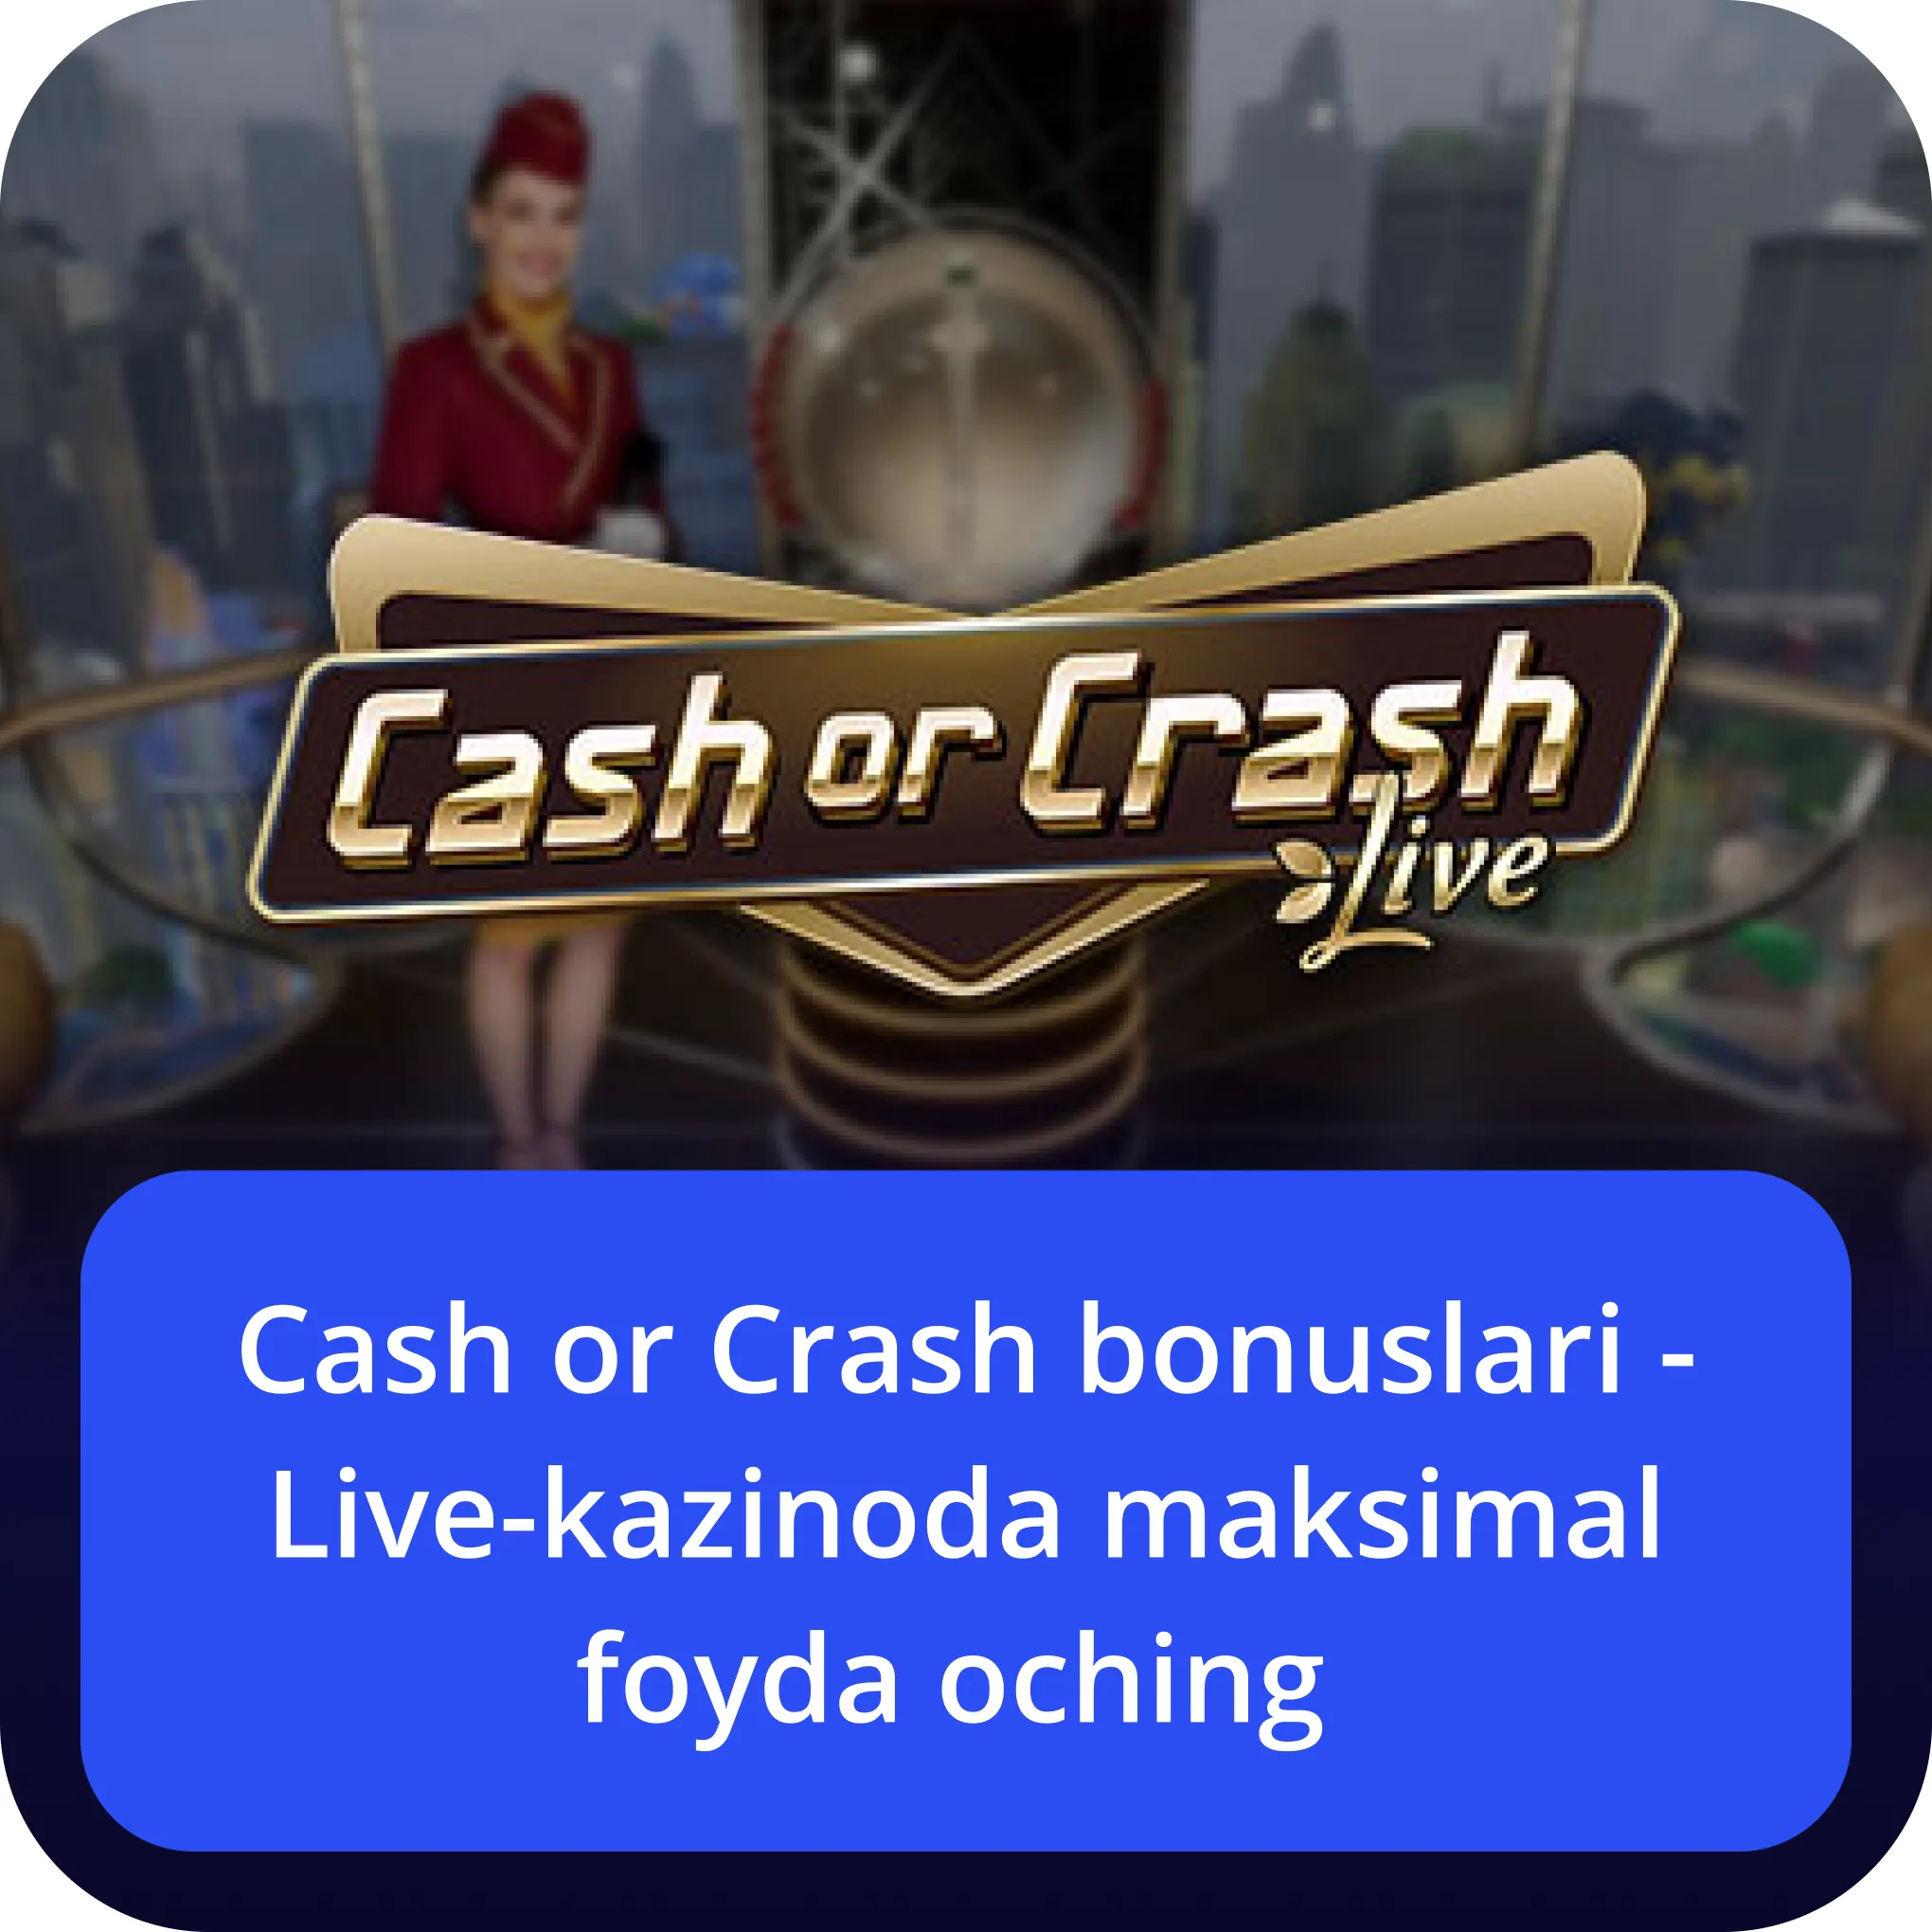 Cash or Crash bonuslari